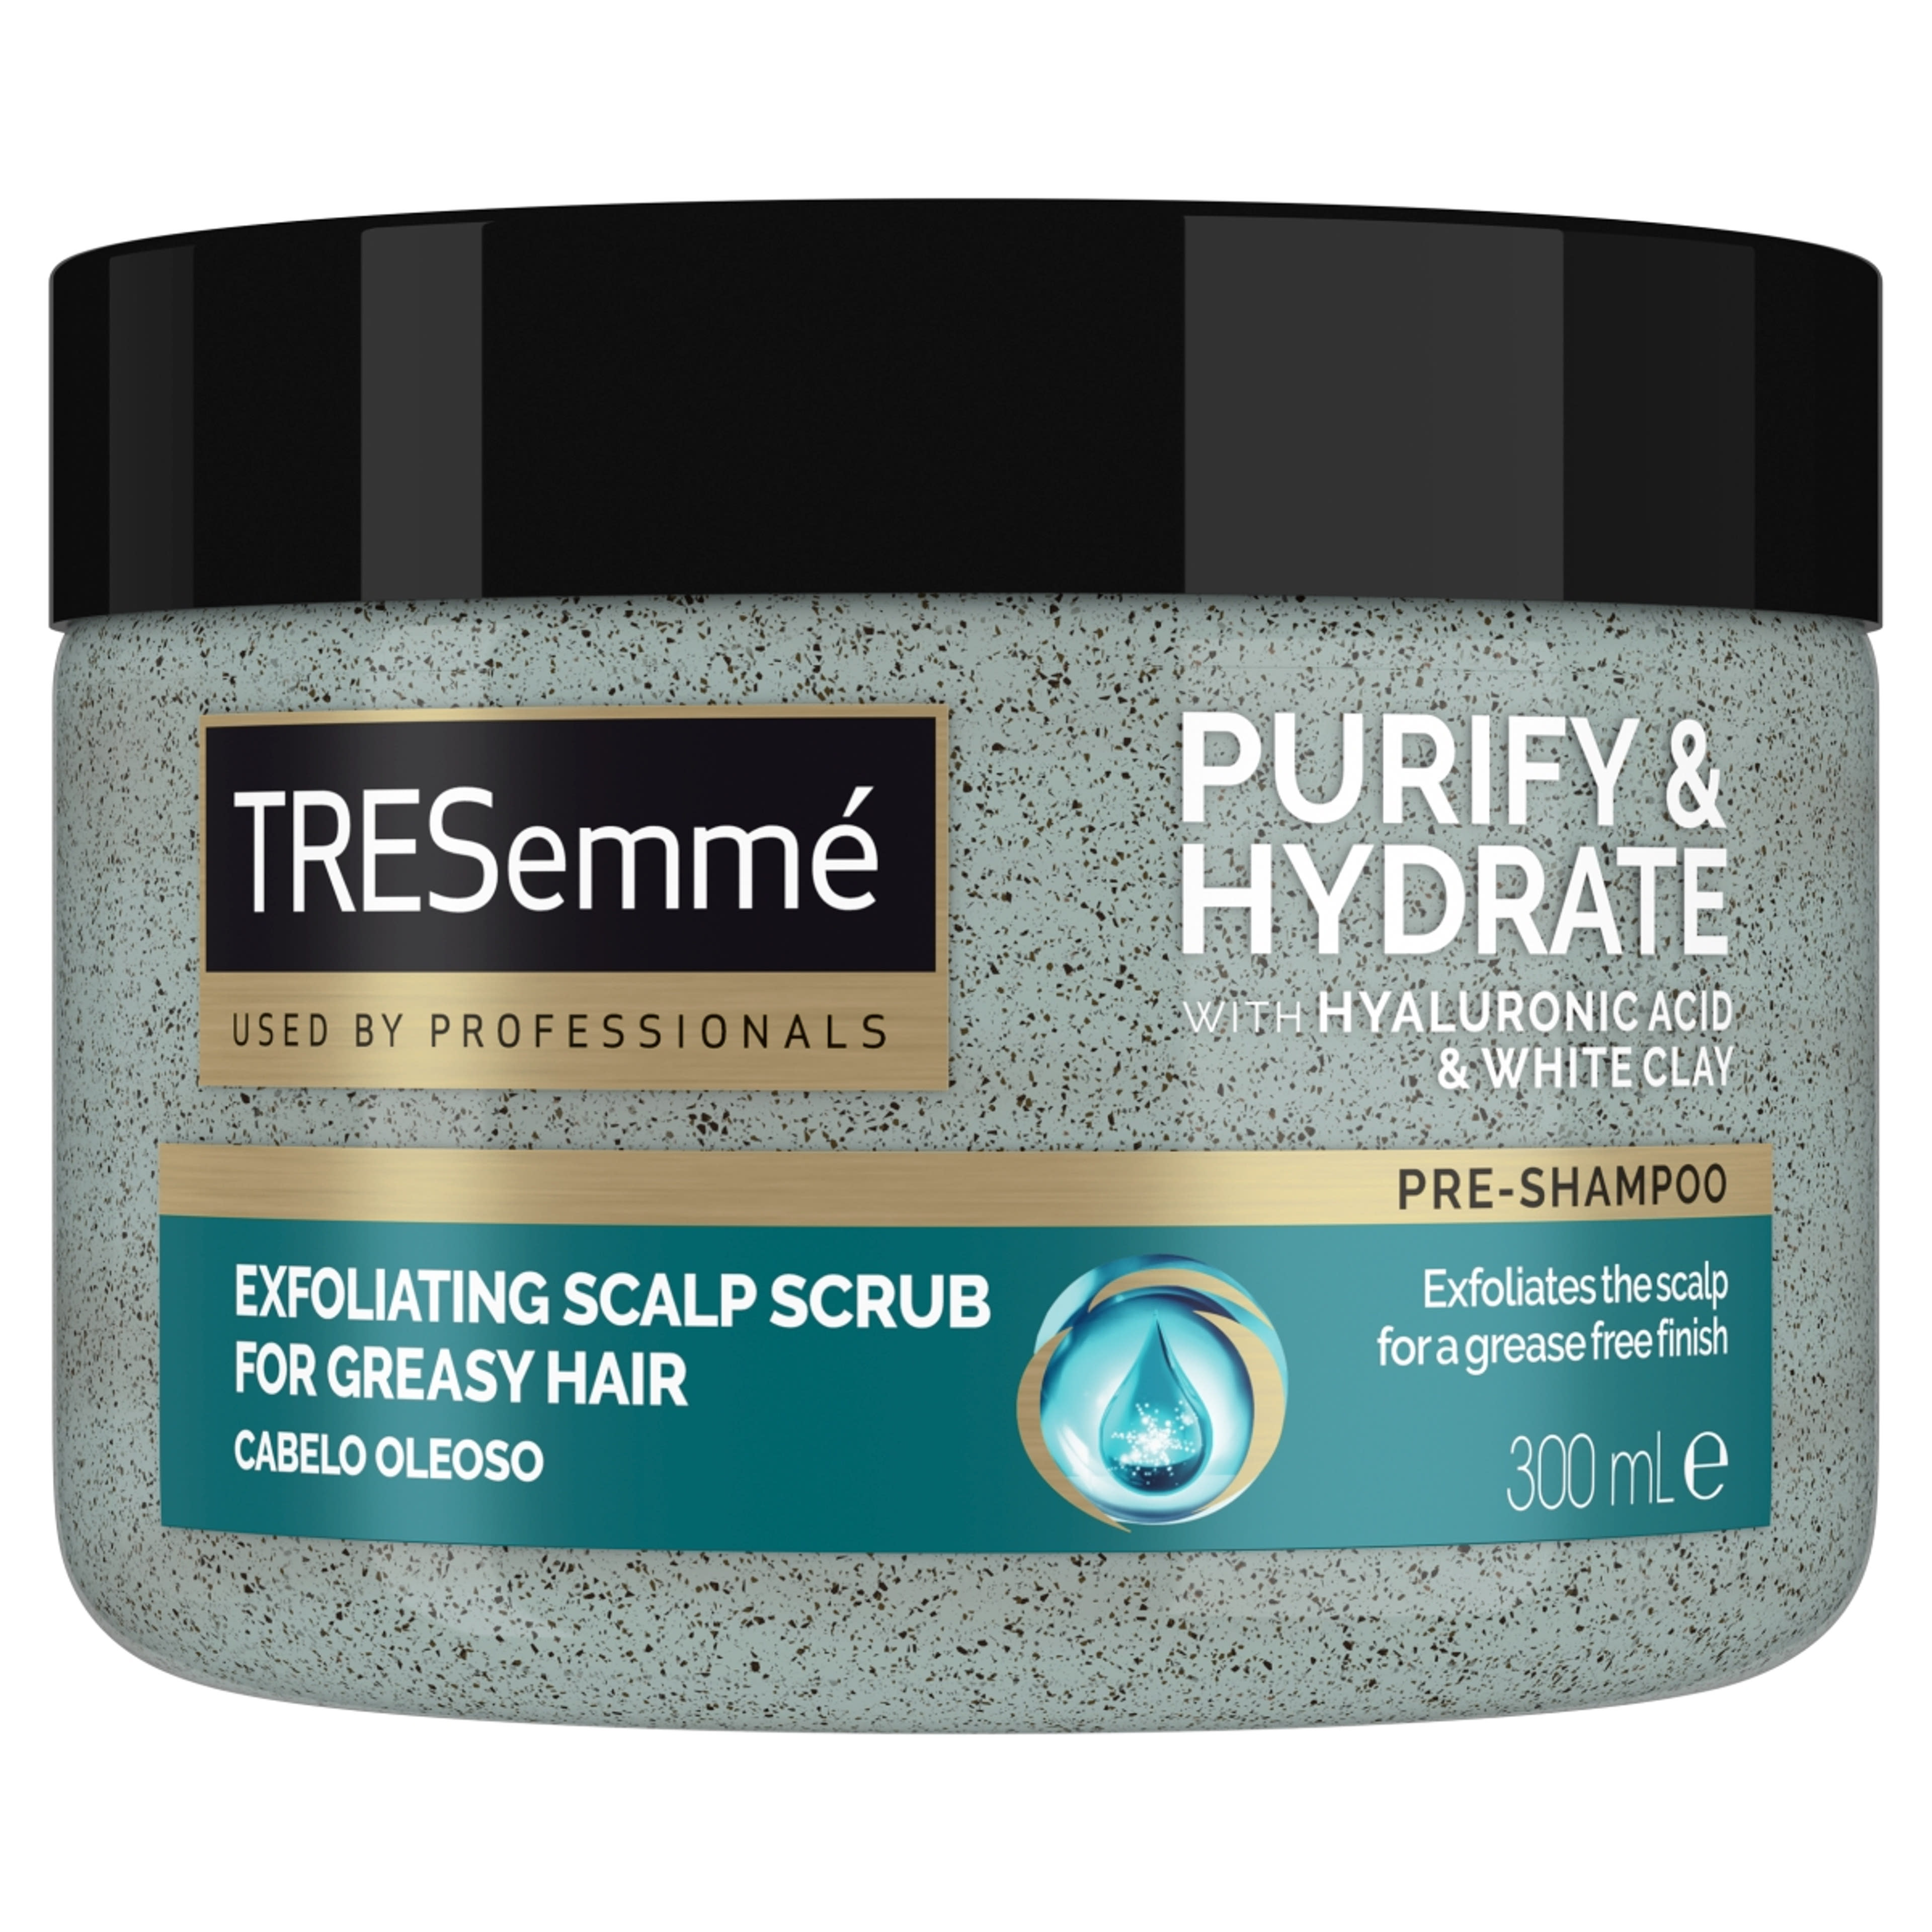 Tresemme purify & hydrate fejbőr radír - 300 ml